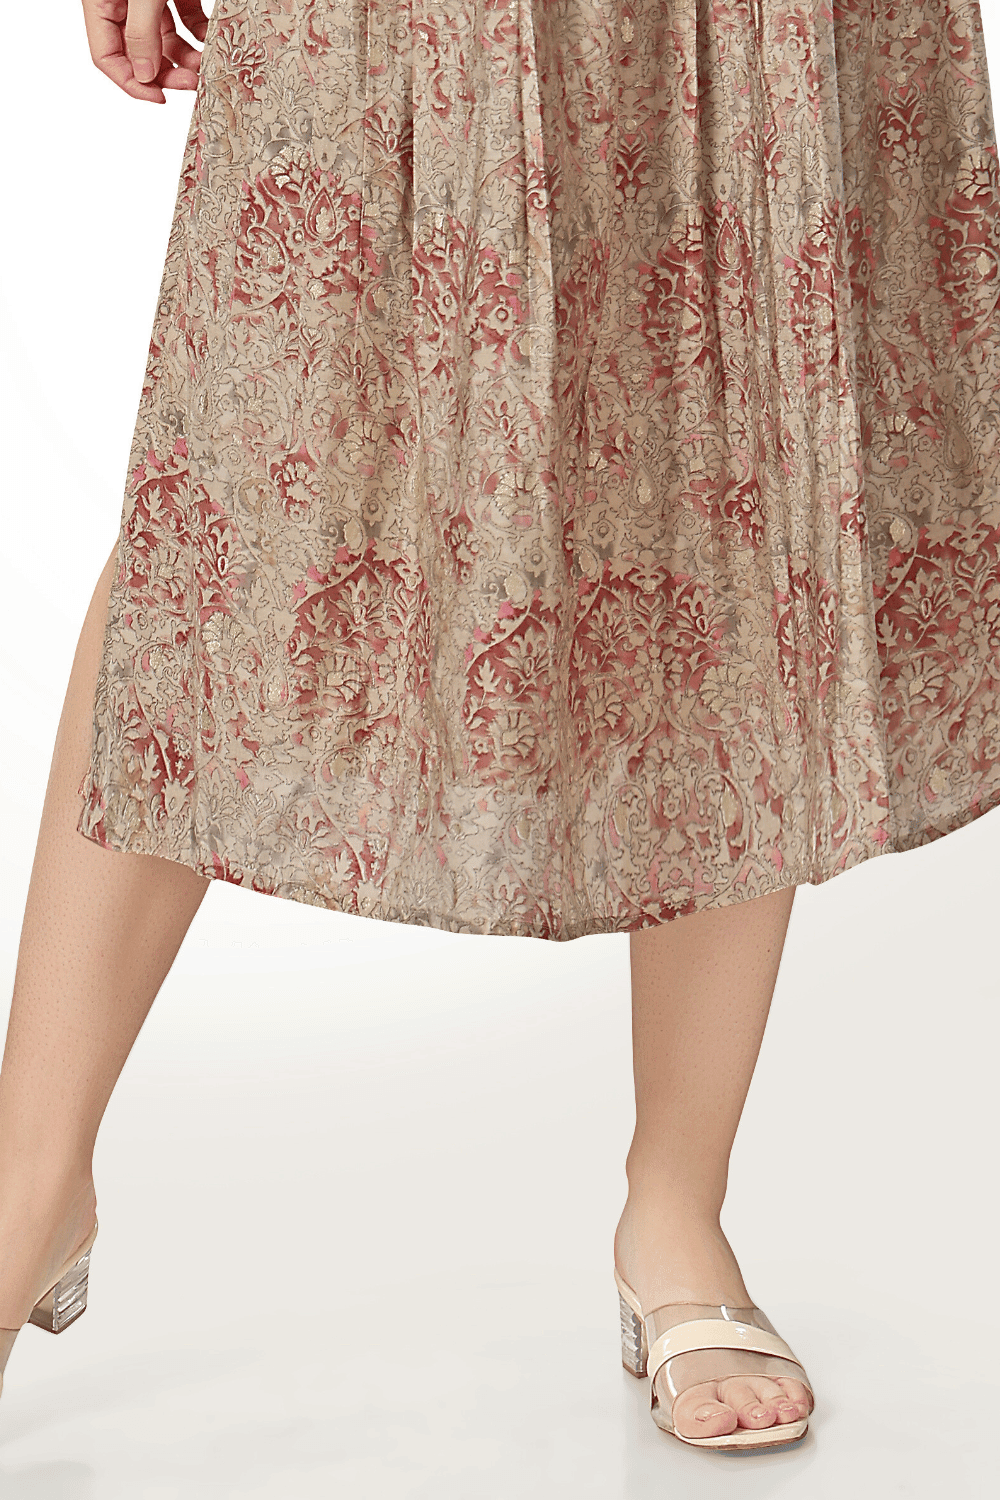 Beige Sequins and Thread work with Digital Print Anarkali Styled Calf Length Kurti - Seasons Chennai